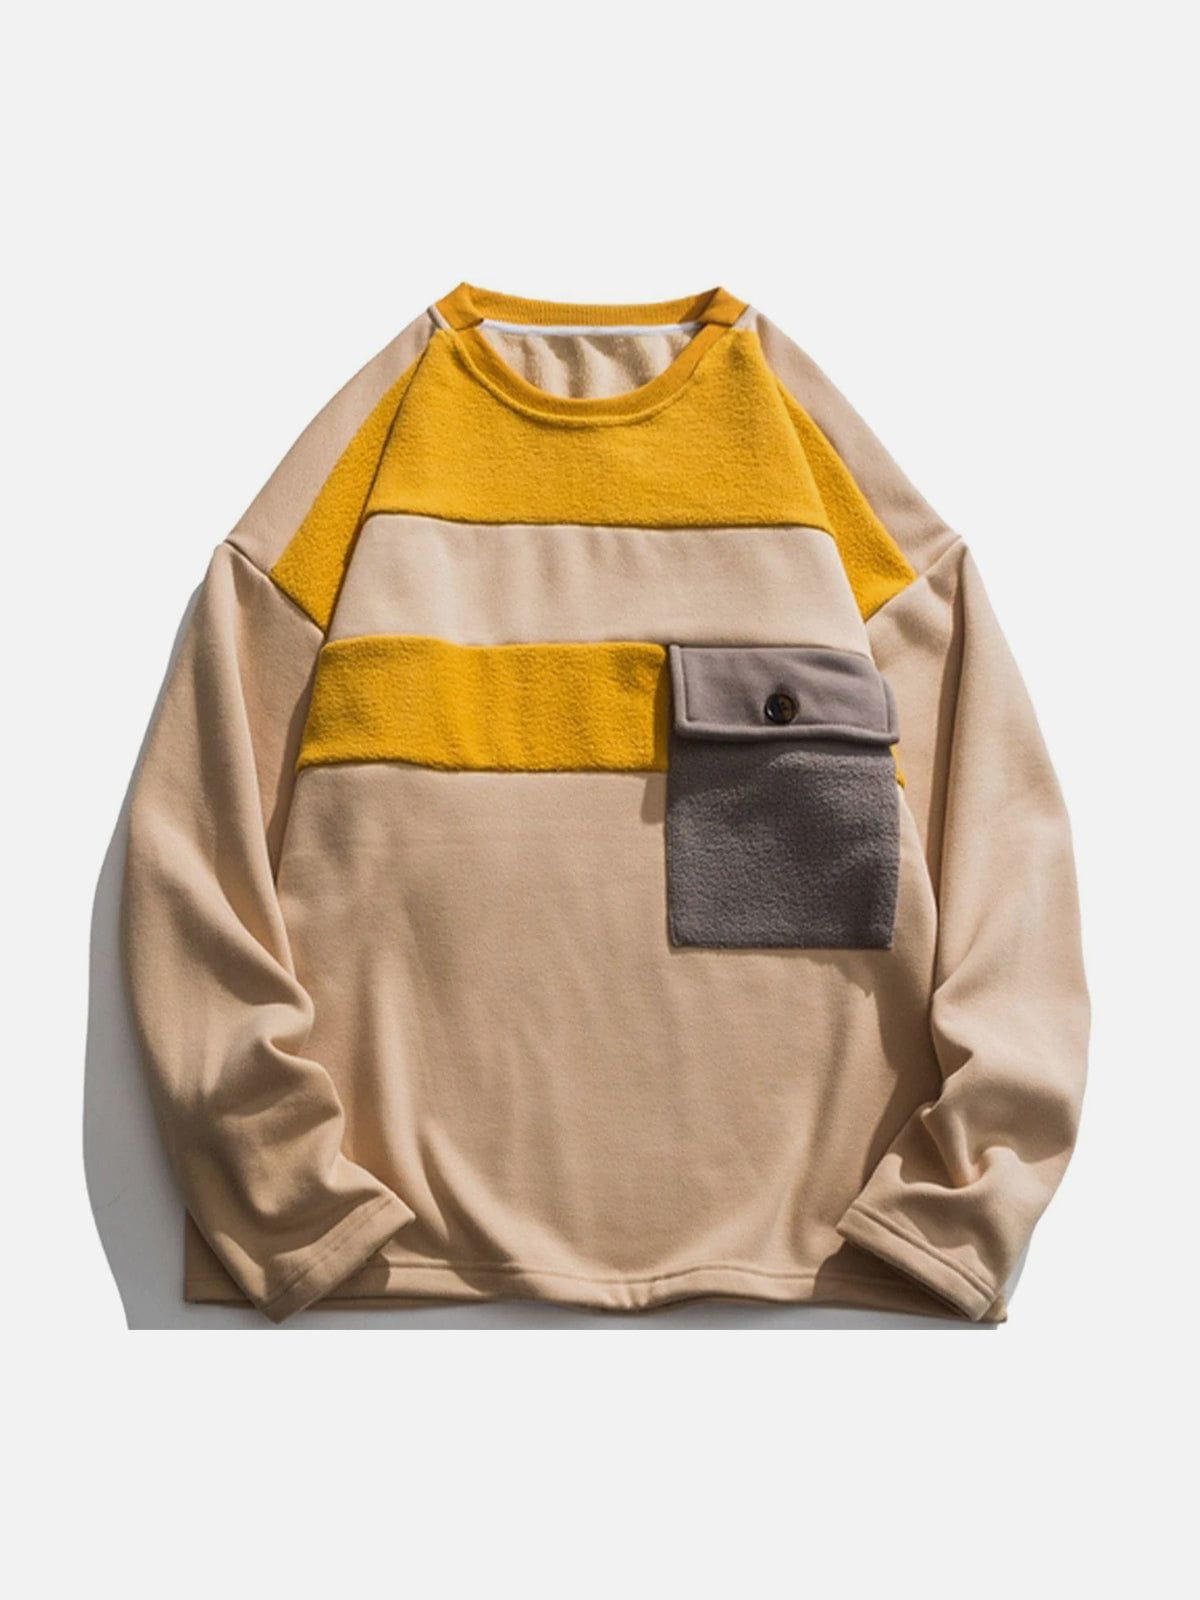 LUXENFY™ - Irregular Stitching Sweatshirt luxenfy.com